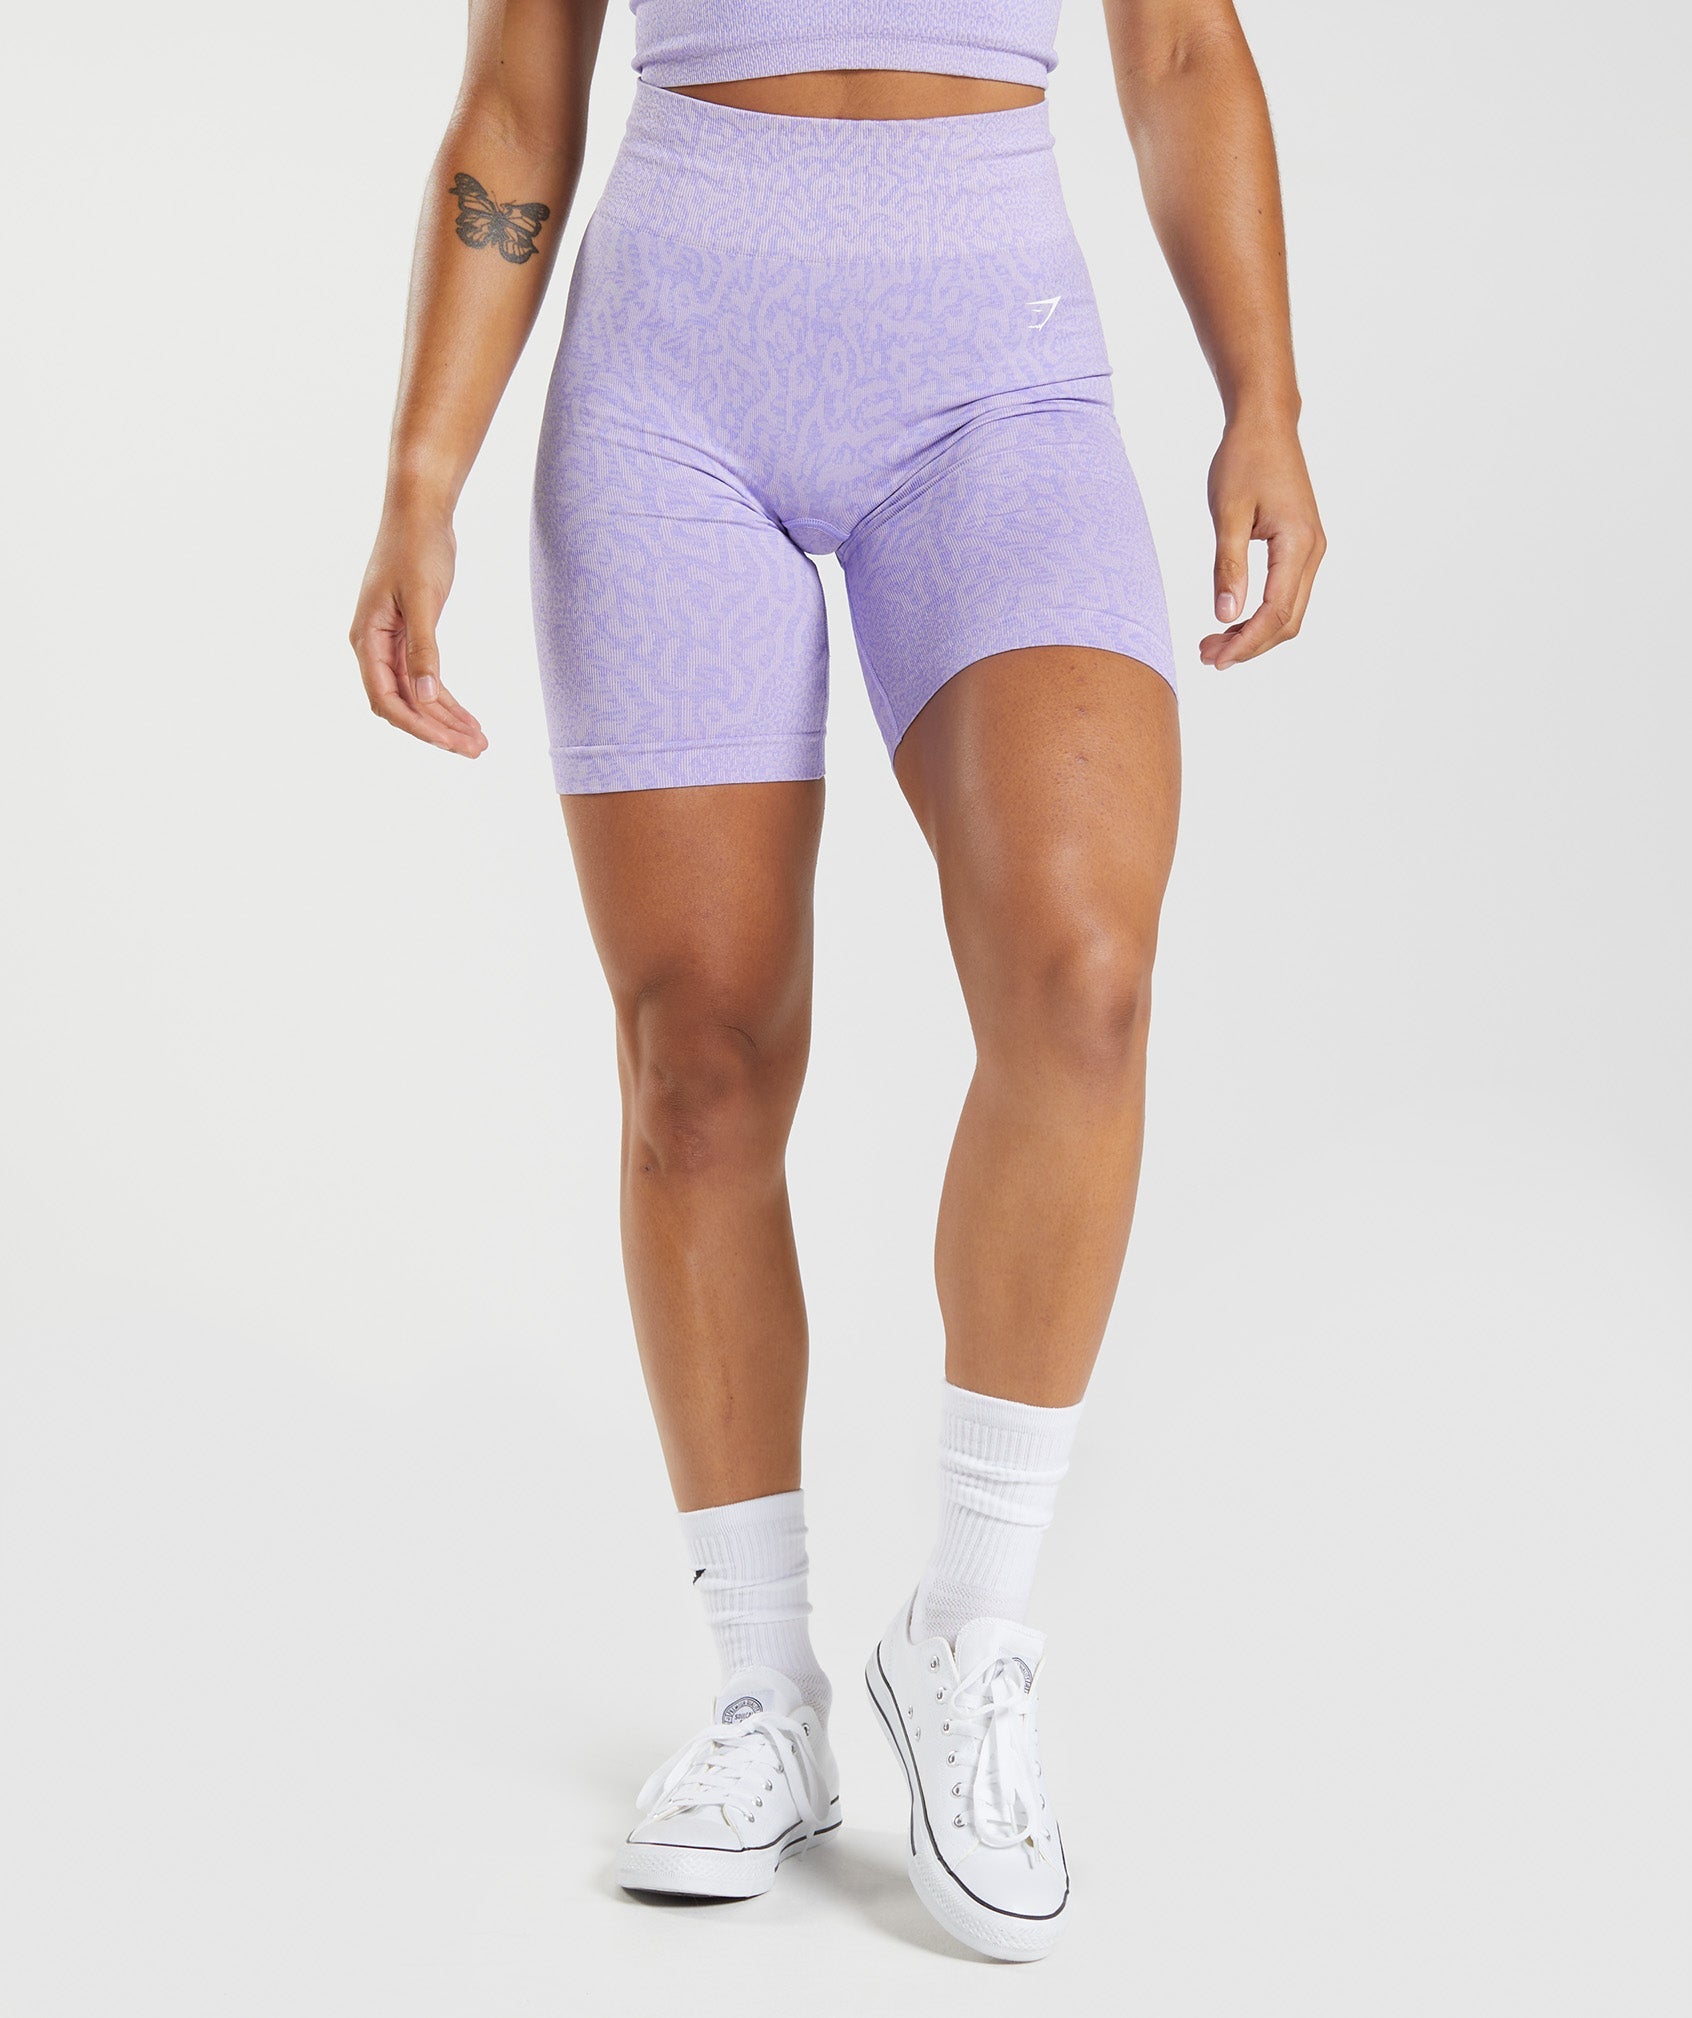 Gymshark Polyamide Athletic Shorts for Women